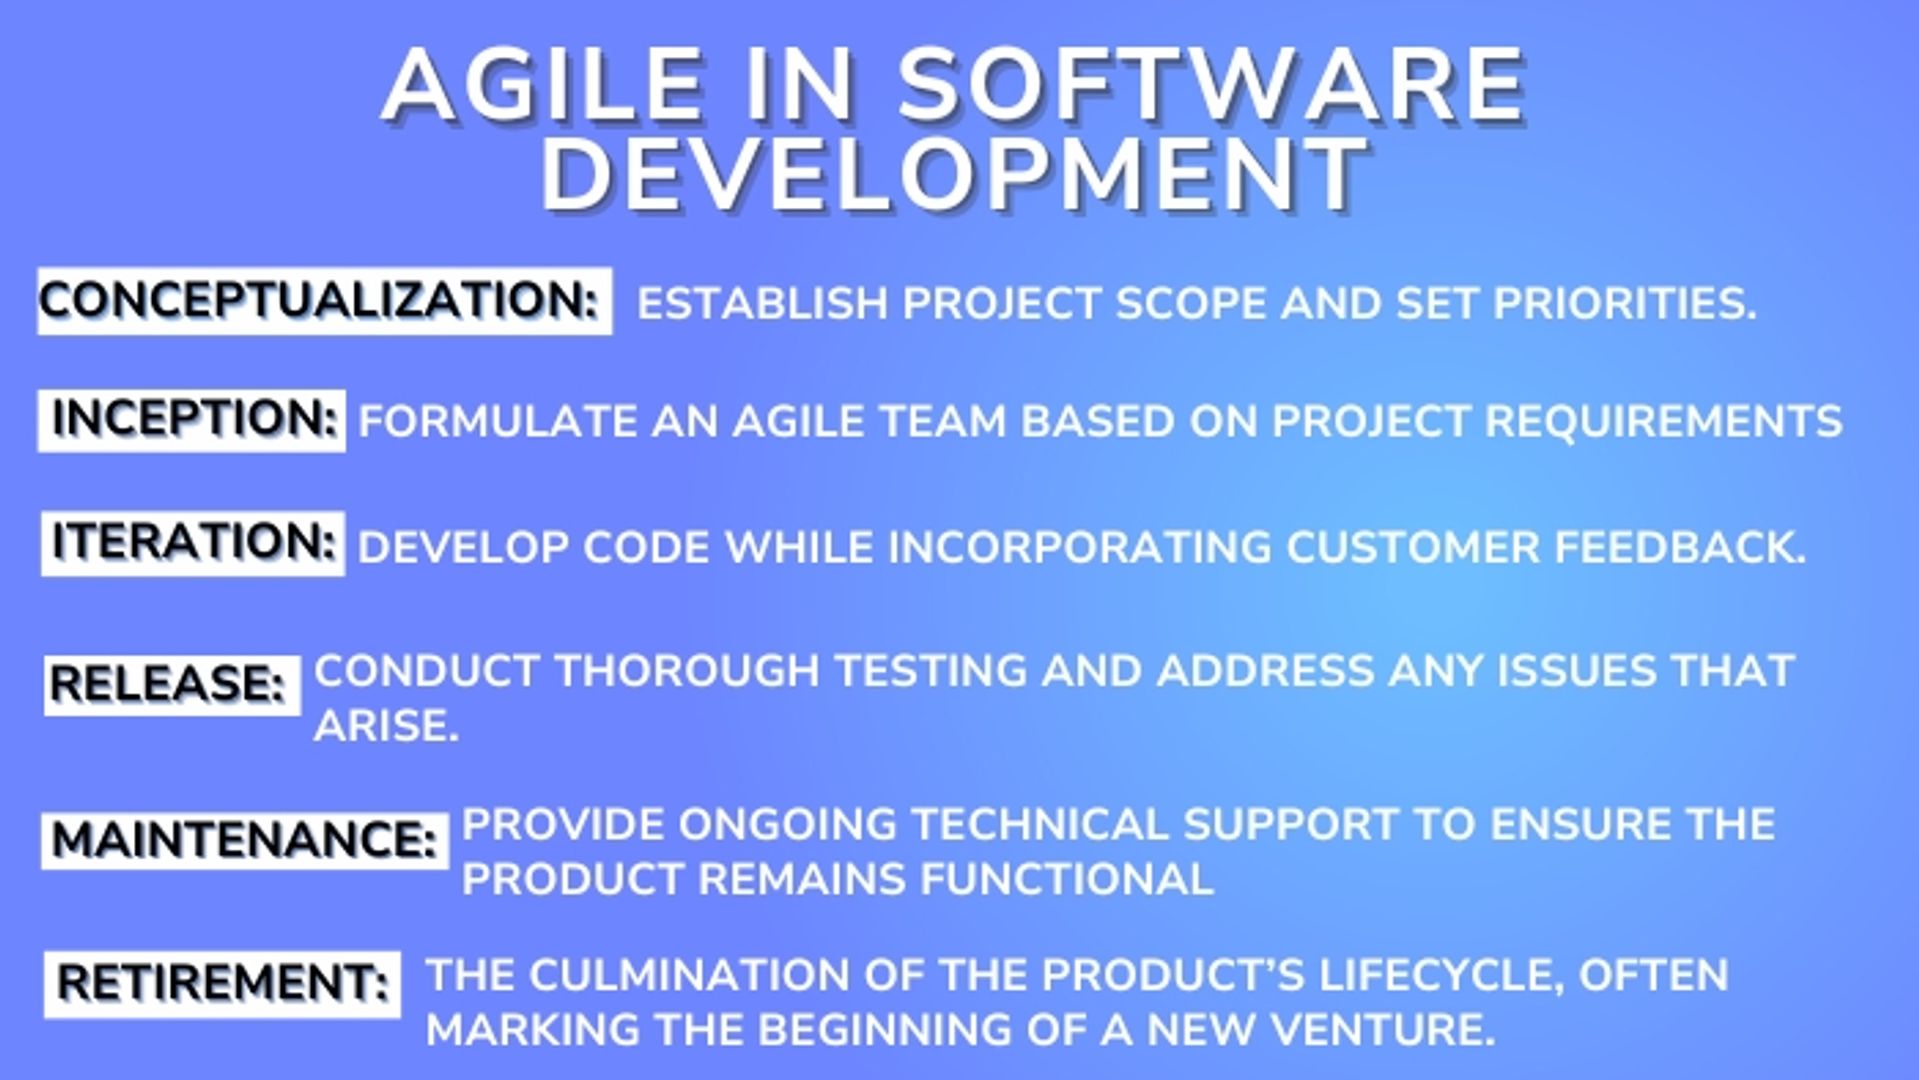 Agile in Software Development